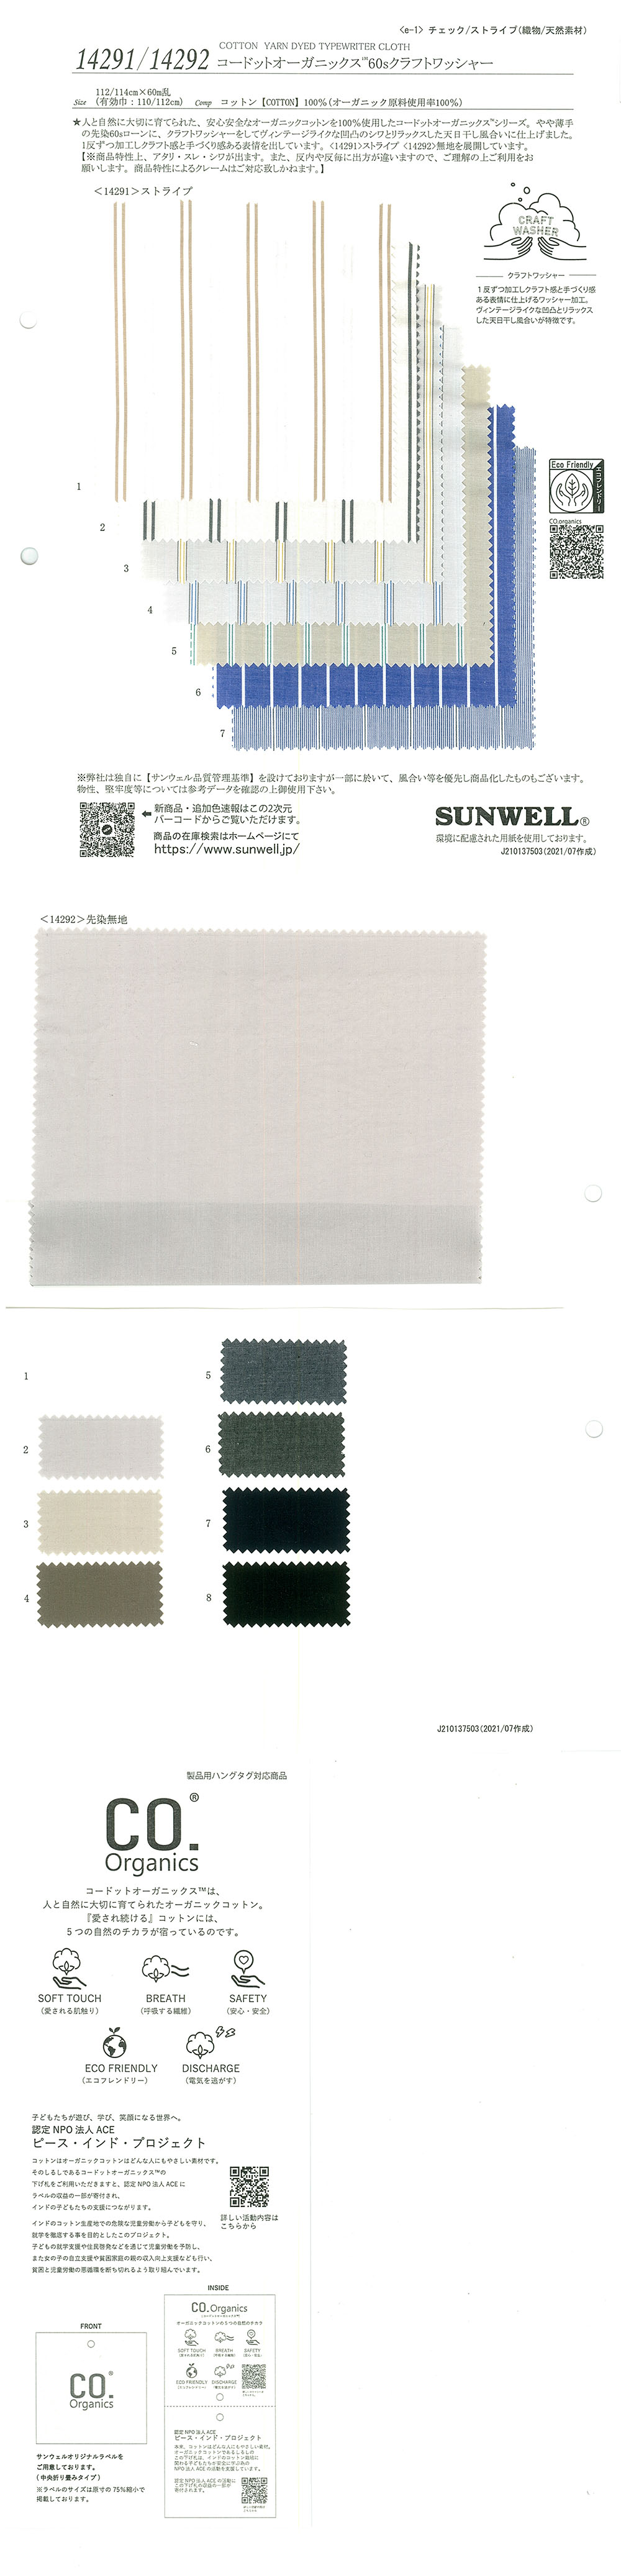 14292 Cordot Organics (R) 60 Single Thread Craft Washer Verarbeitung[Textilgewebe] SUNWELL